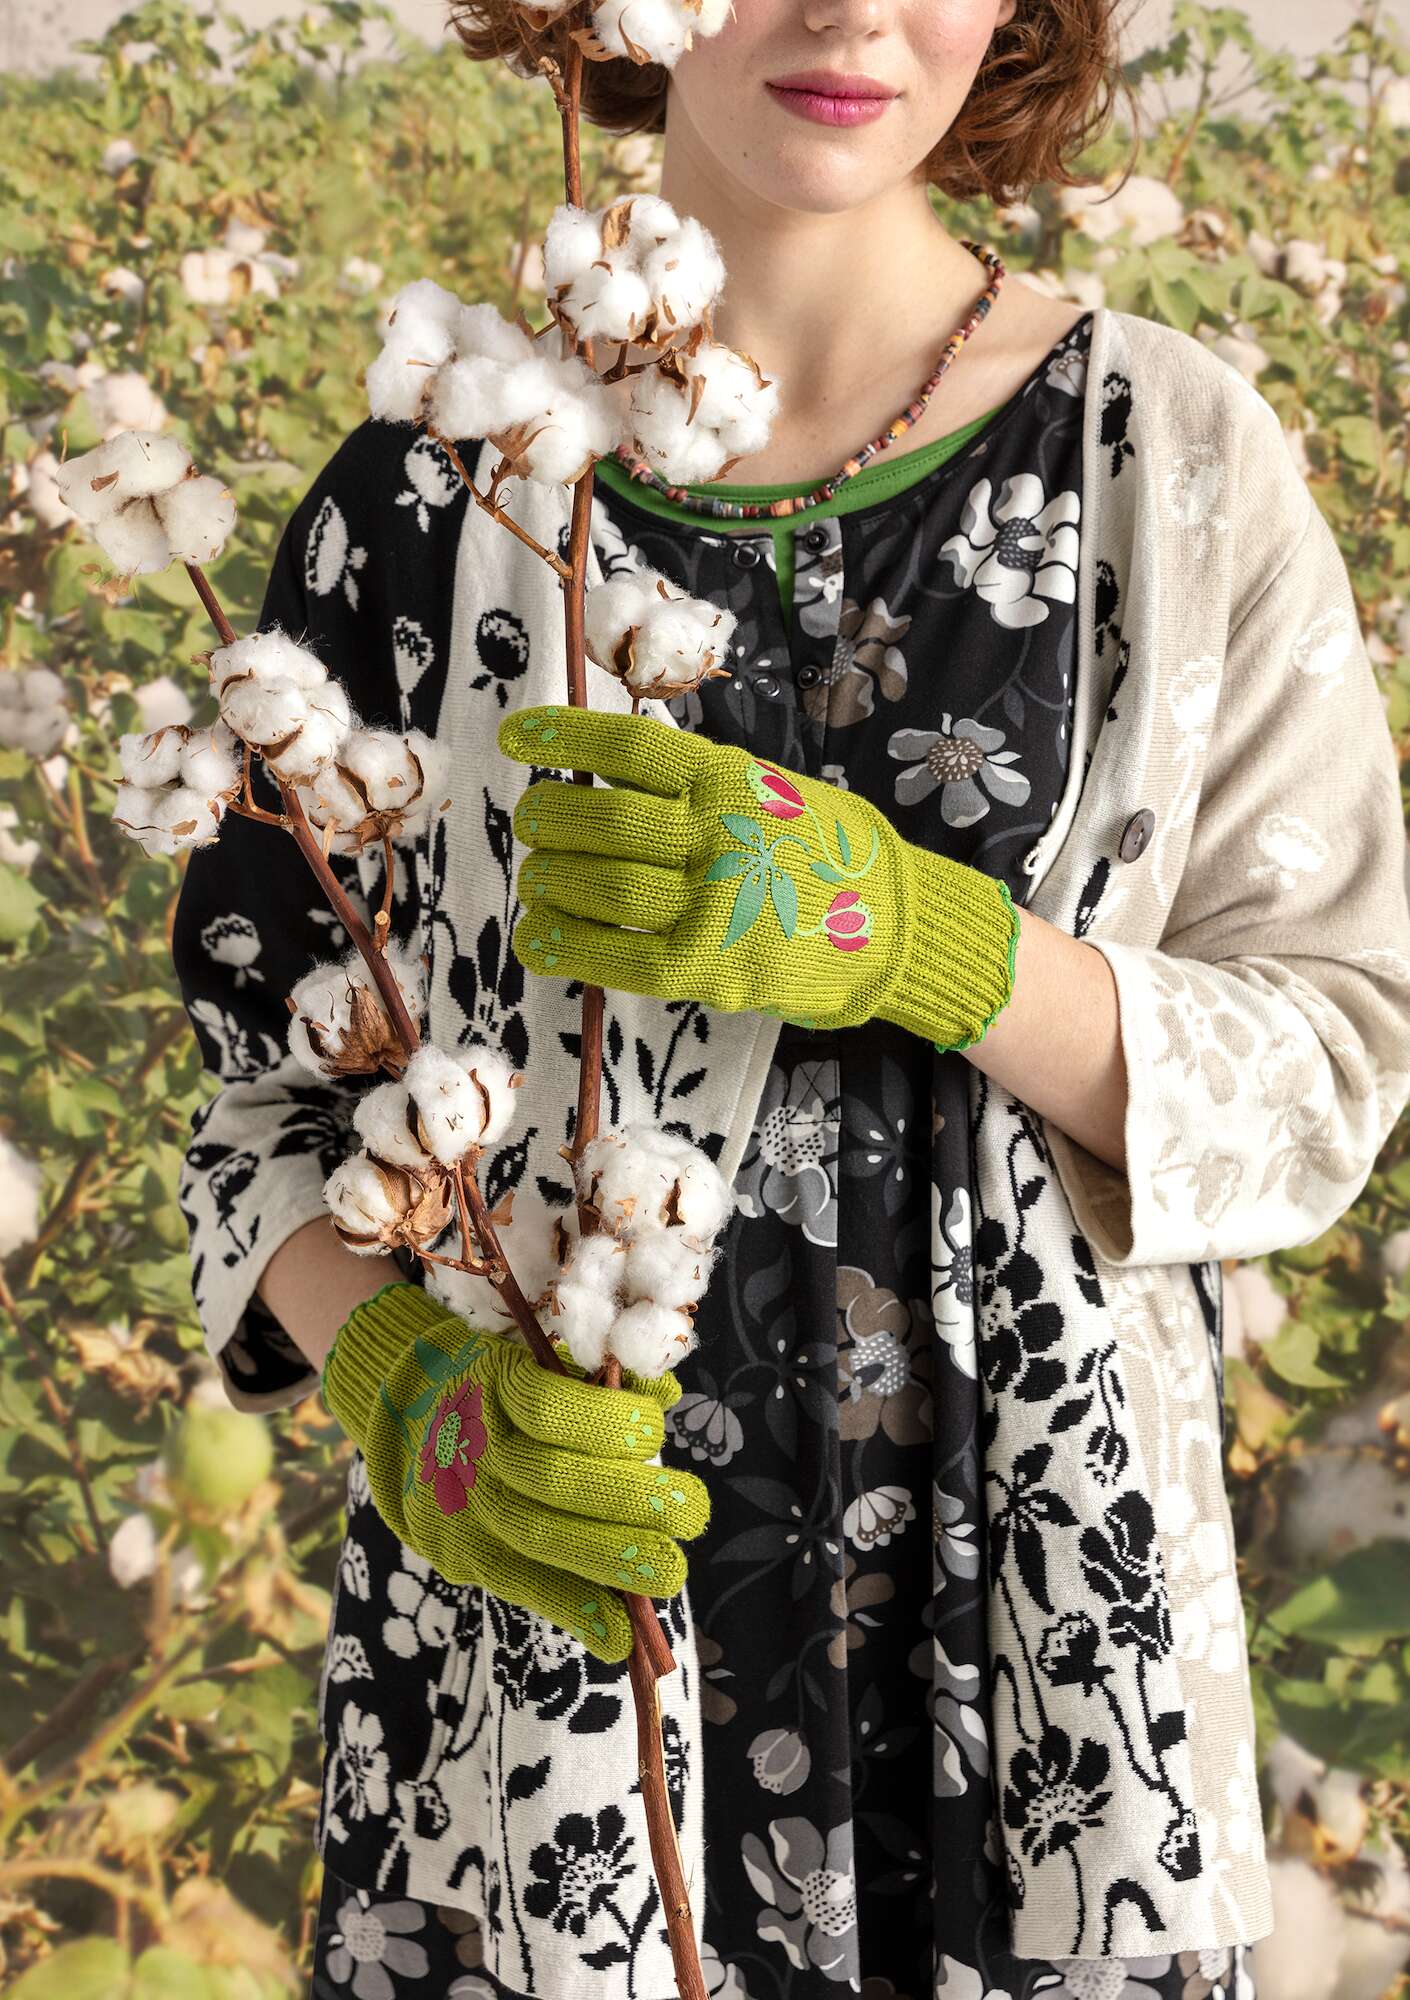 “Gardener” gardening gloves made from recycled polyester kiwi thumbnail